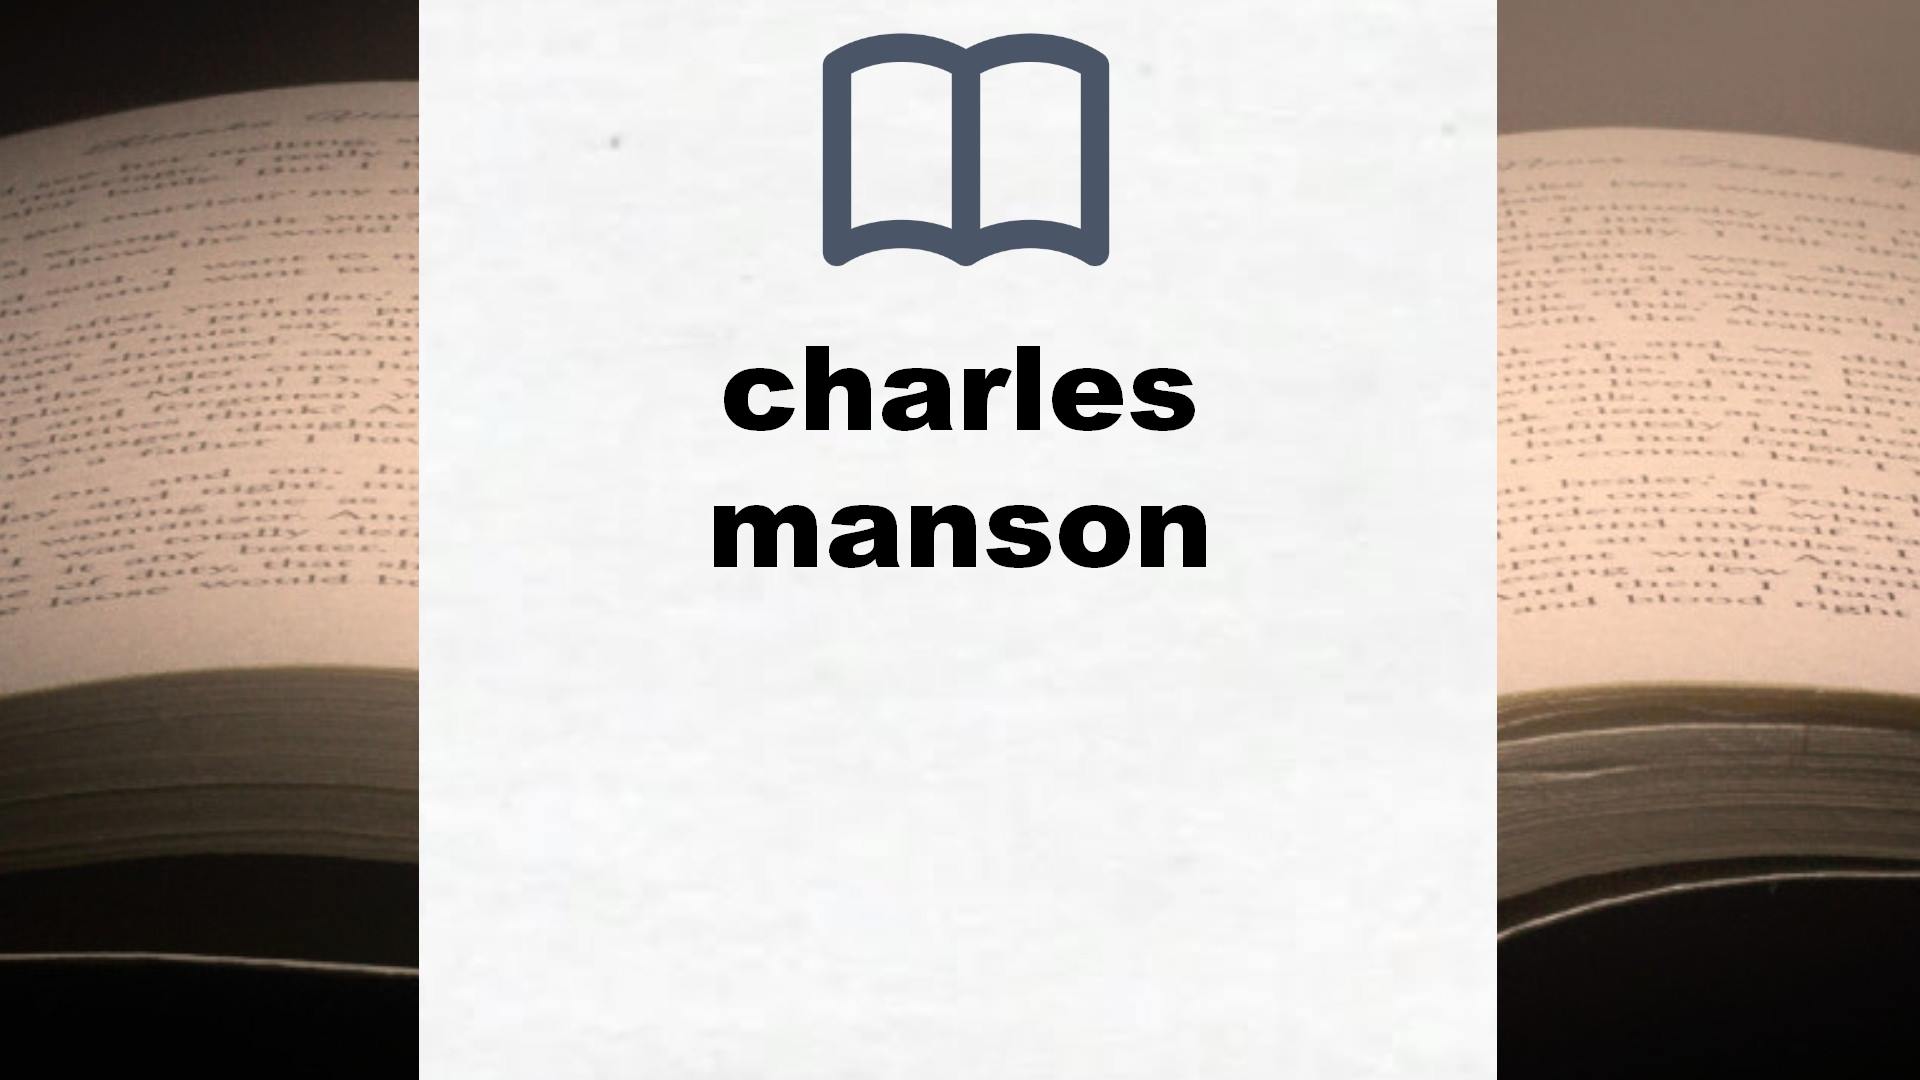 Libros sobre charles manson